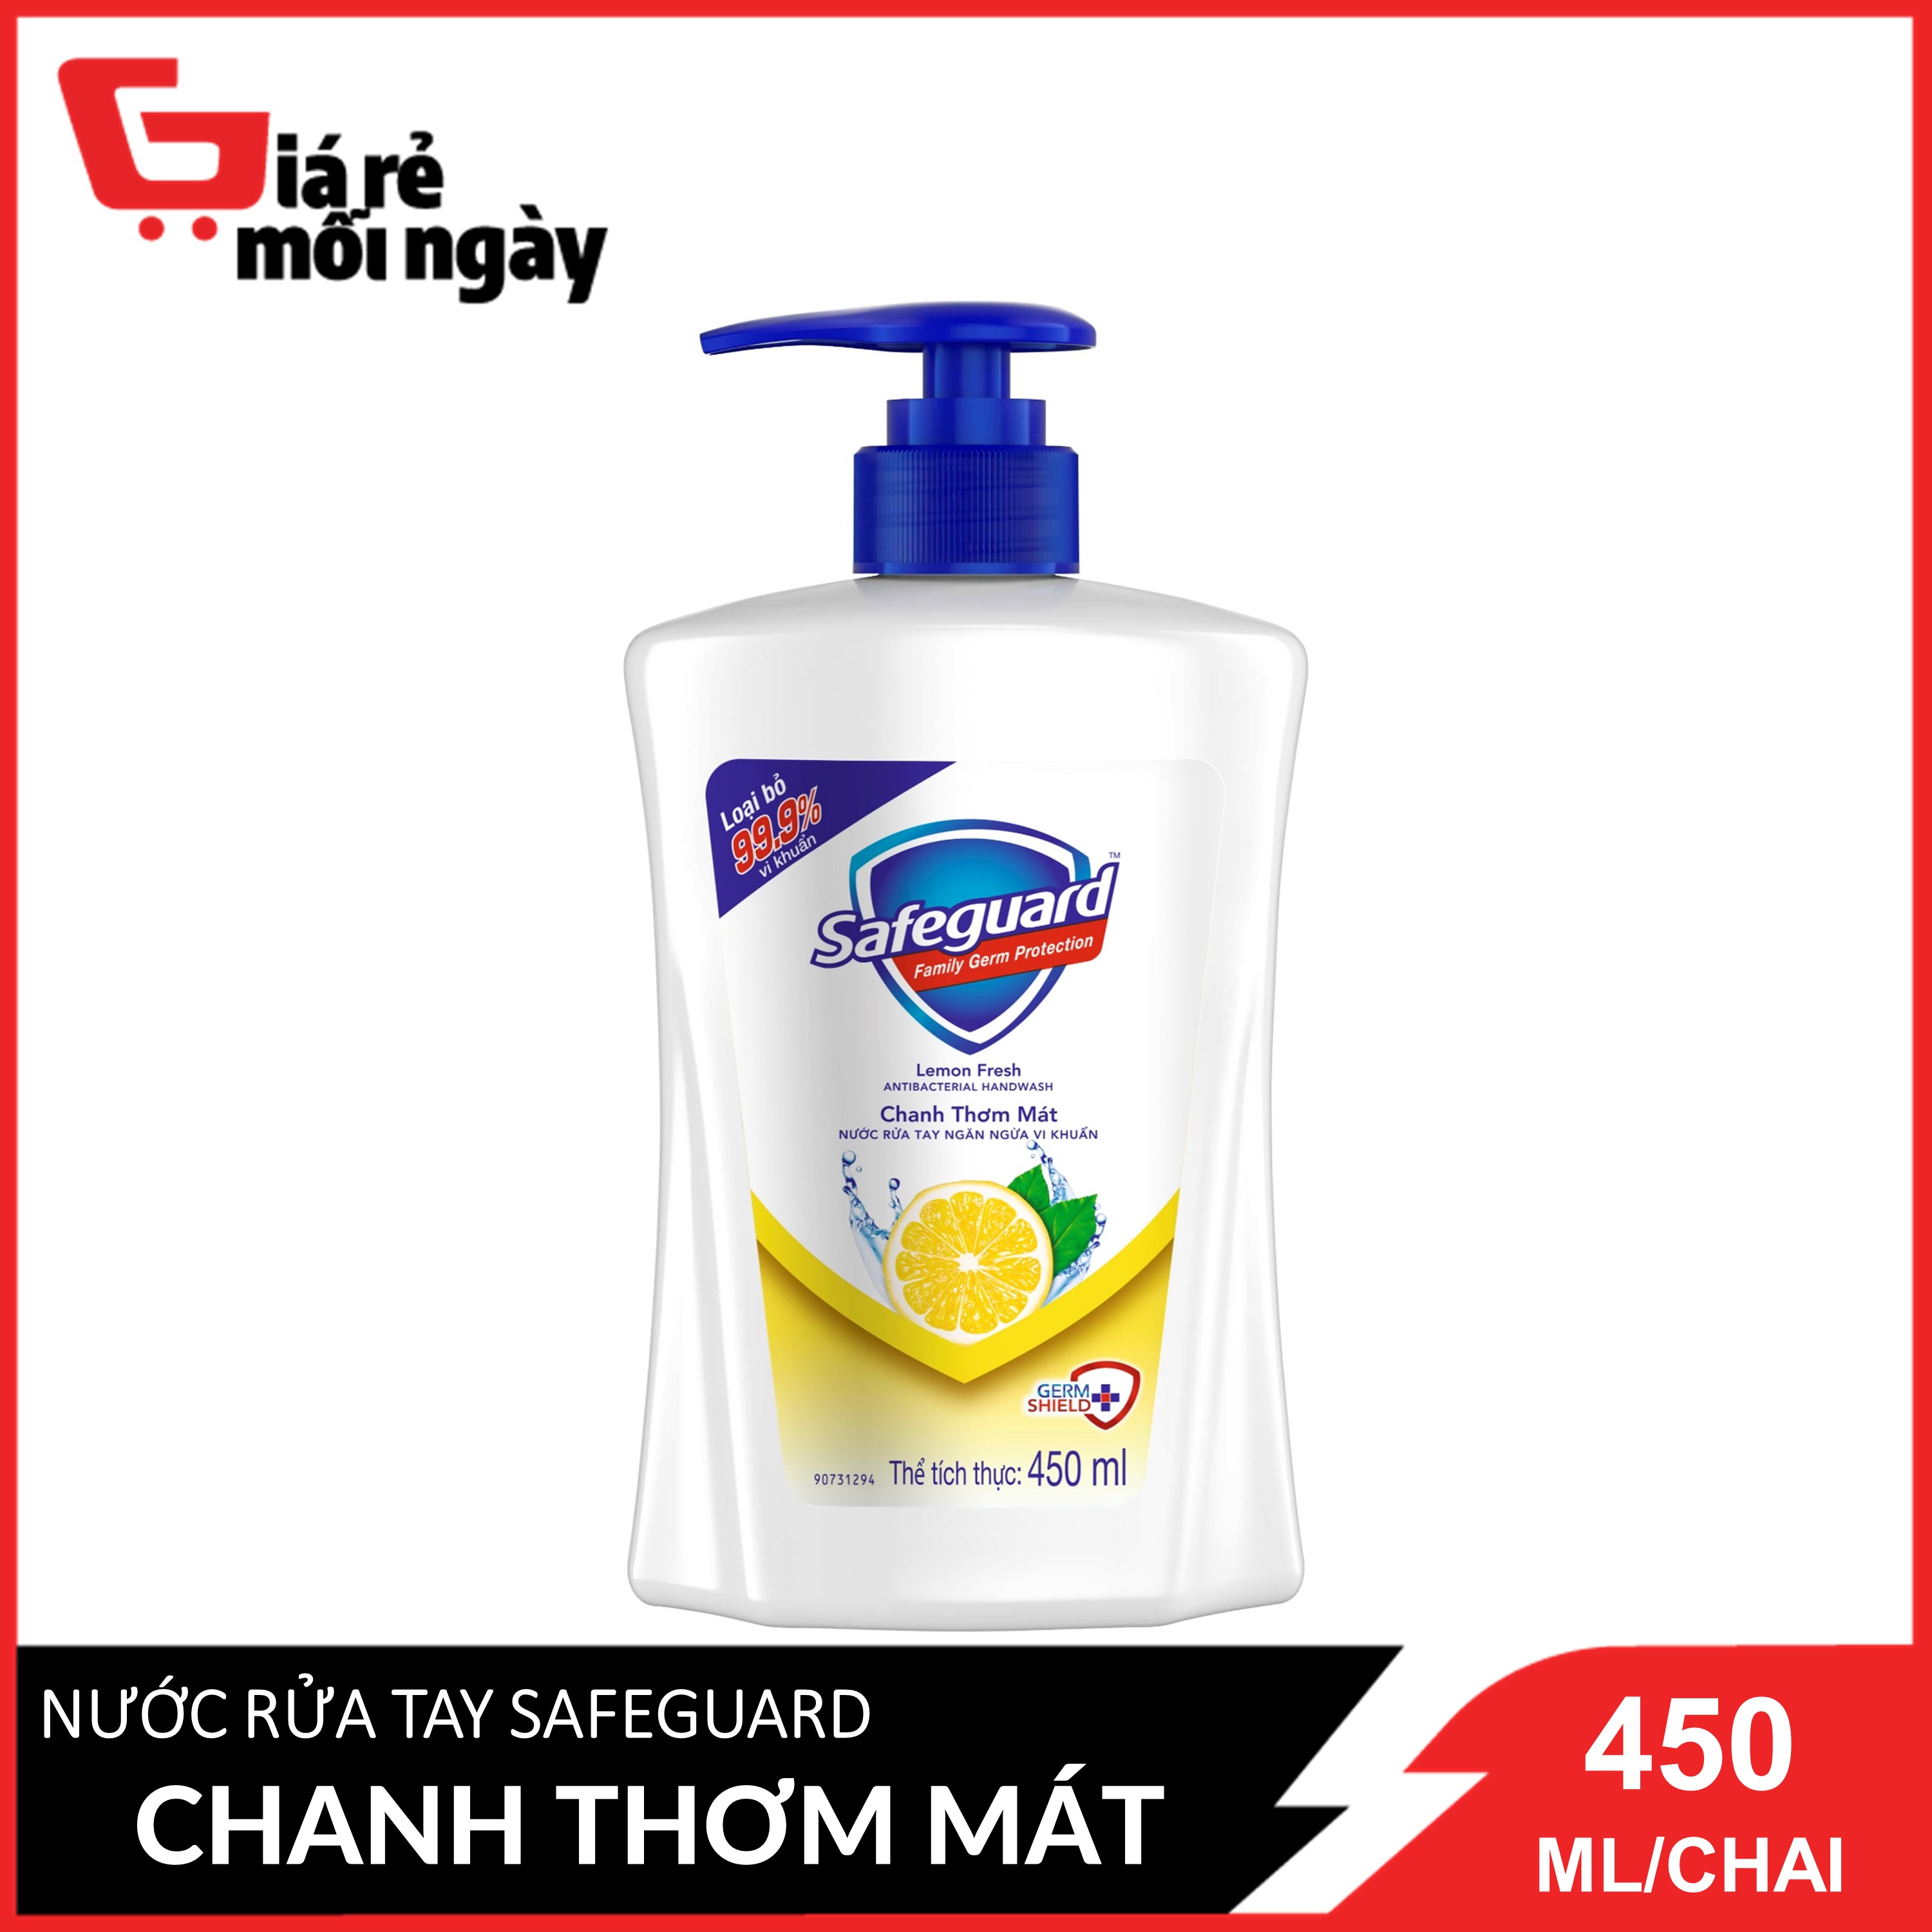 nuoc-rua-tay-safeguard-huong-chanh-thom-mat-450ml-chai